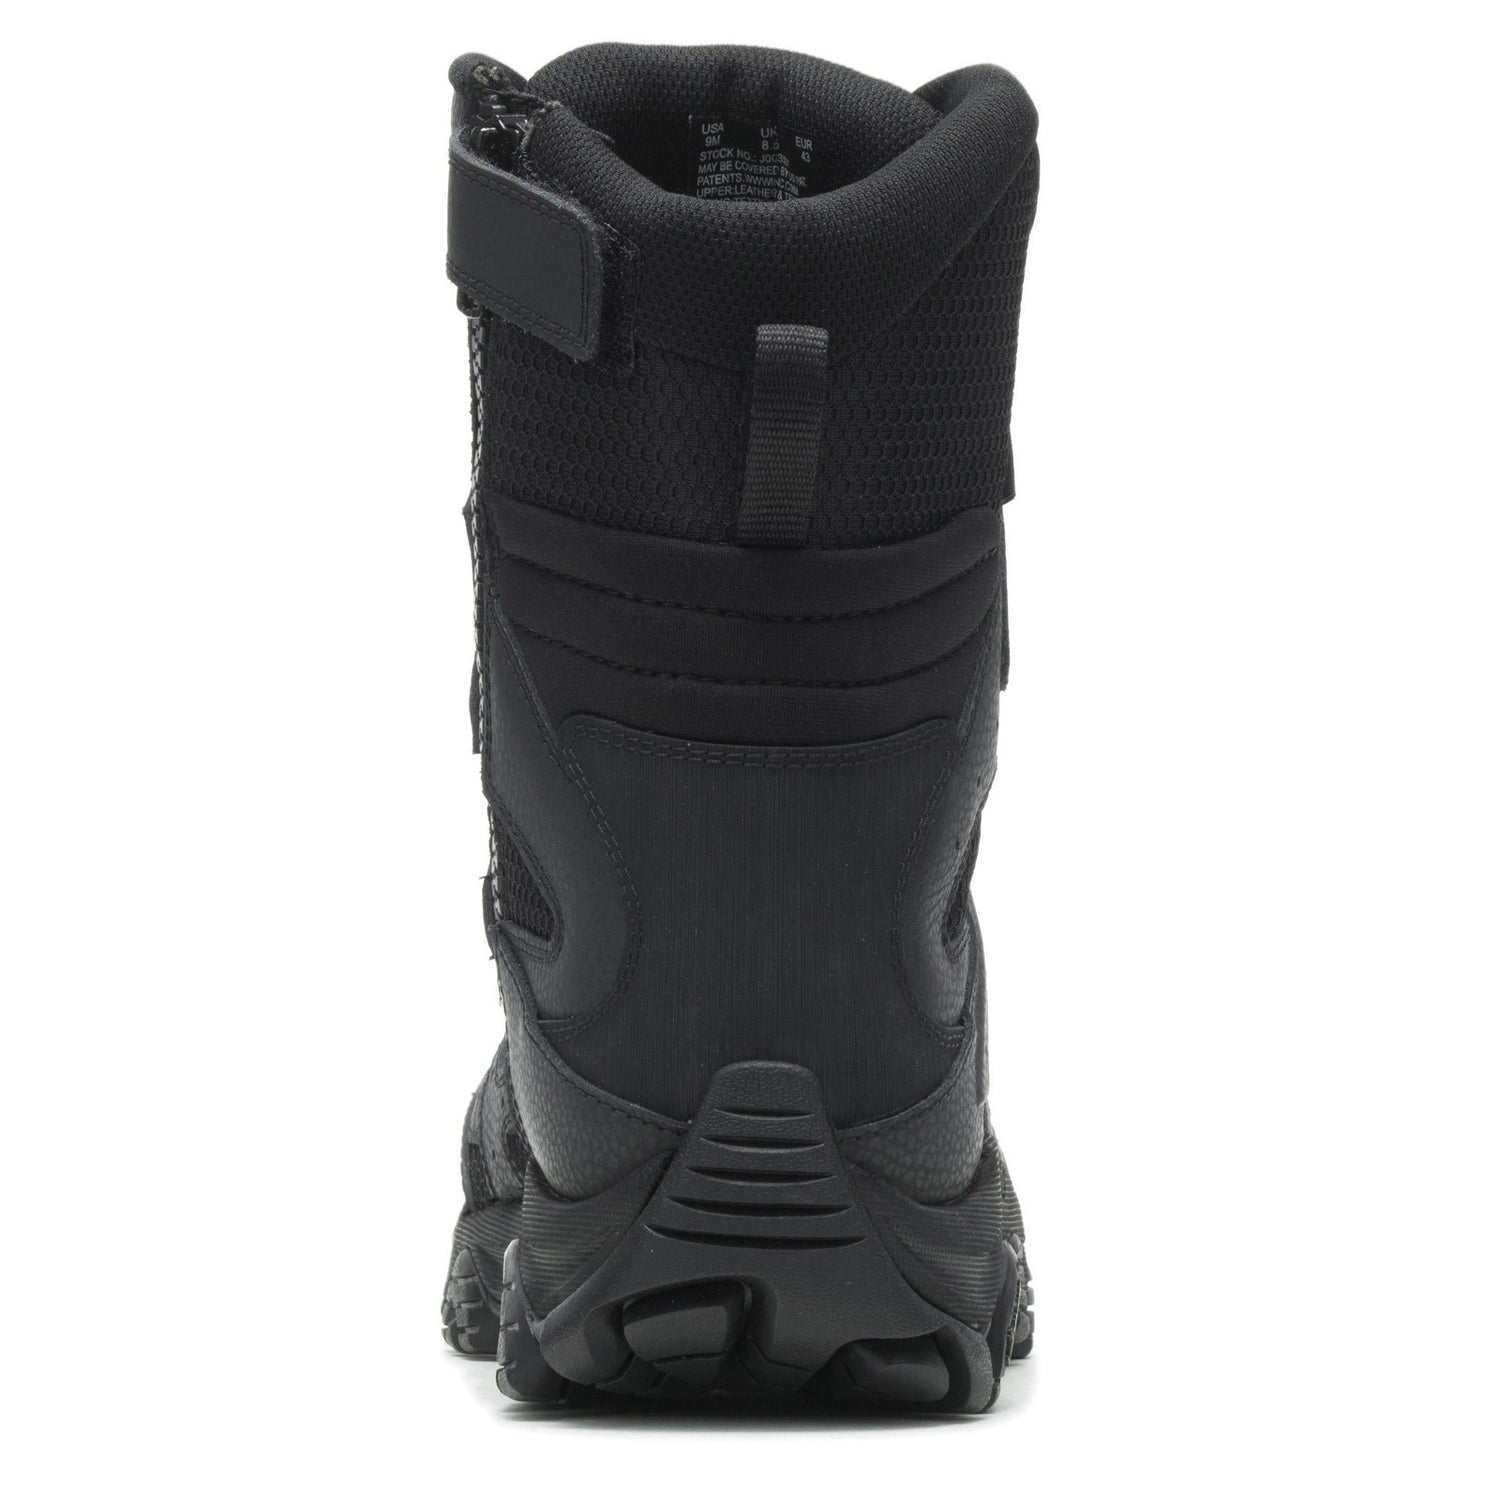 Peltz Shoes  Men's Merrell Moab 3 WP Tactical Zip 8in Work Boot - Wide Width Black J003907W